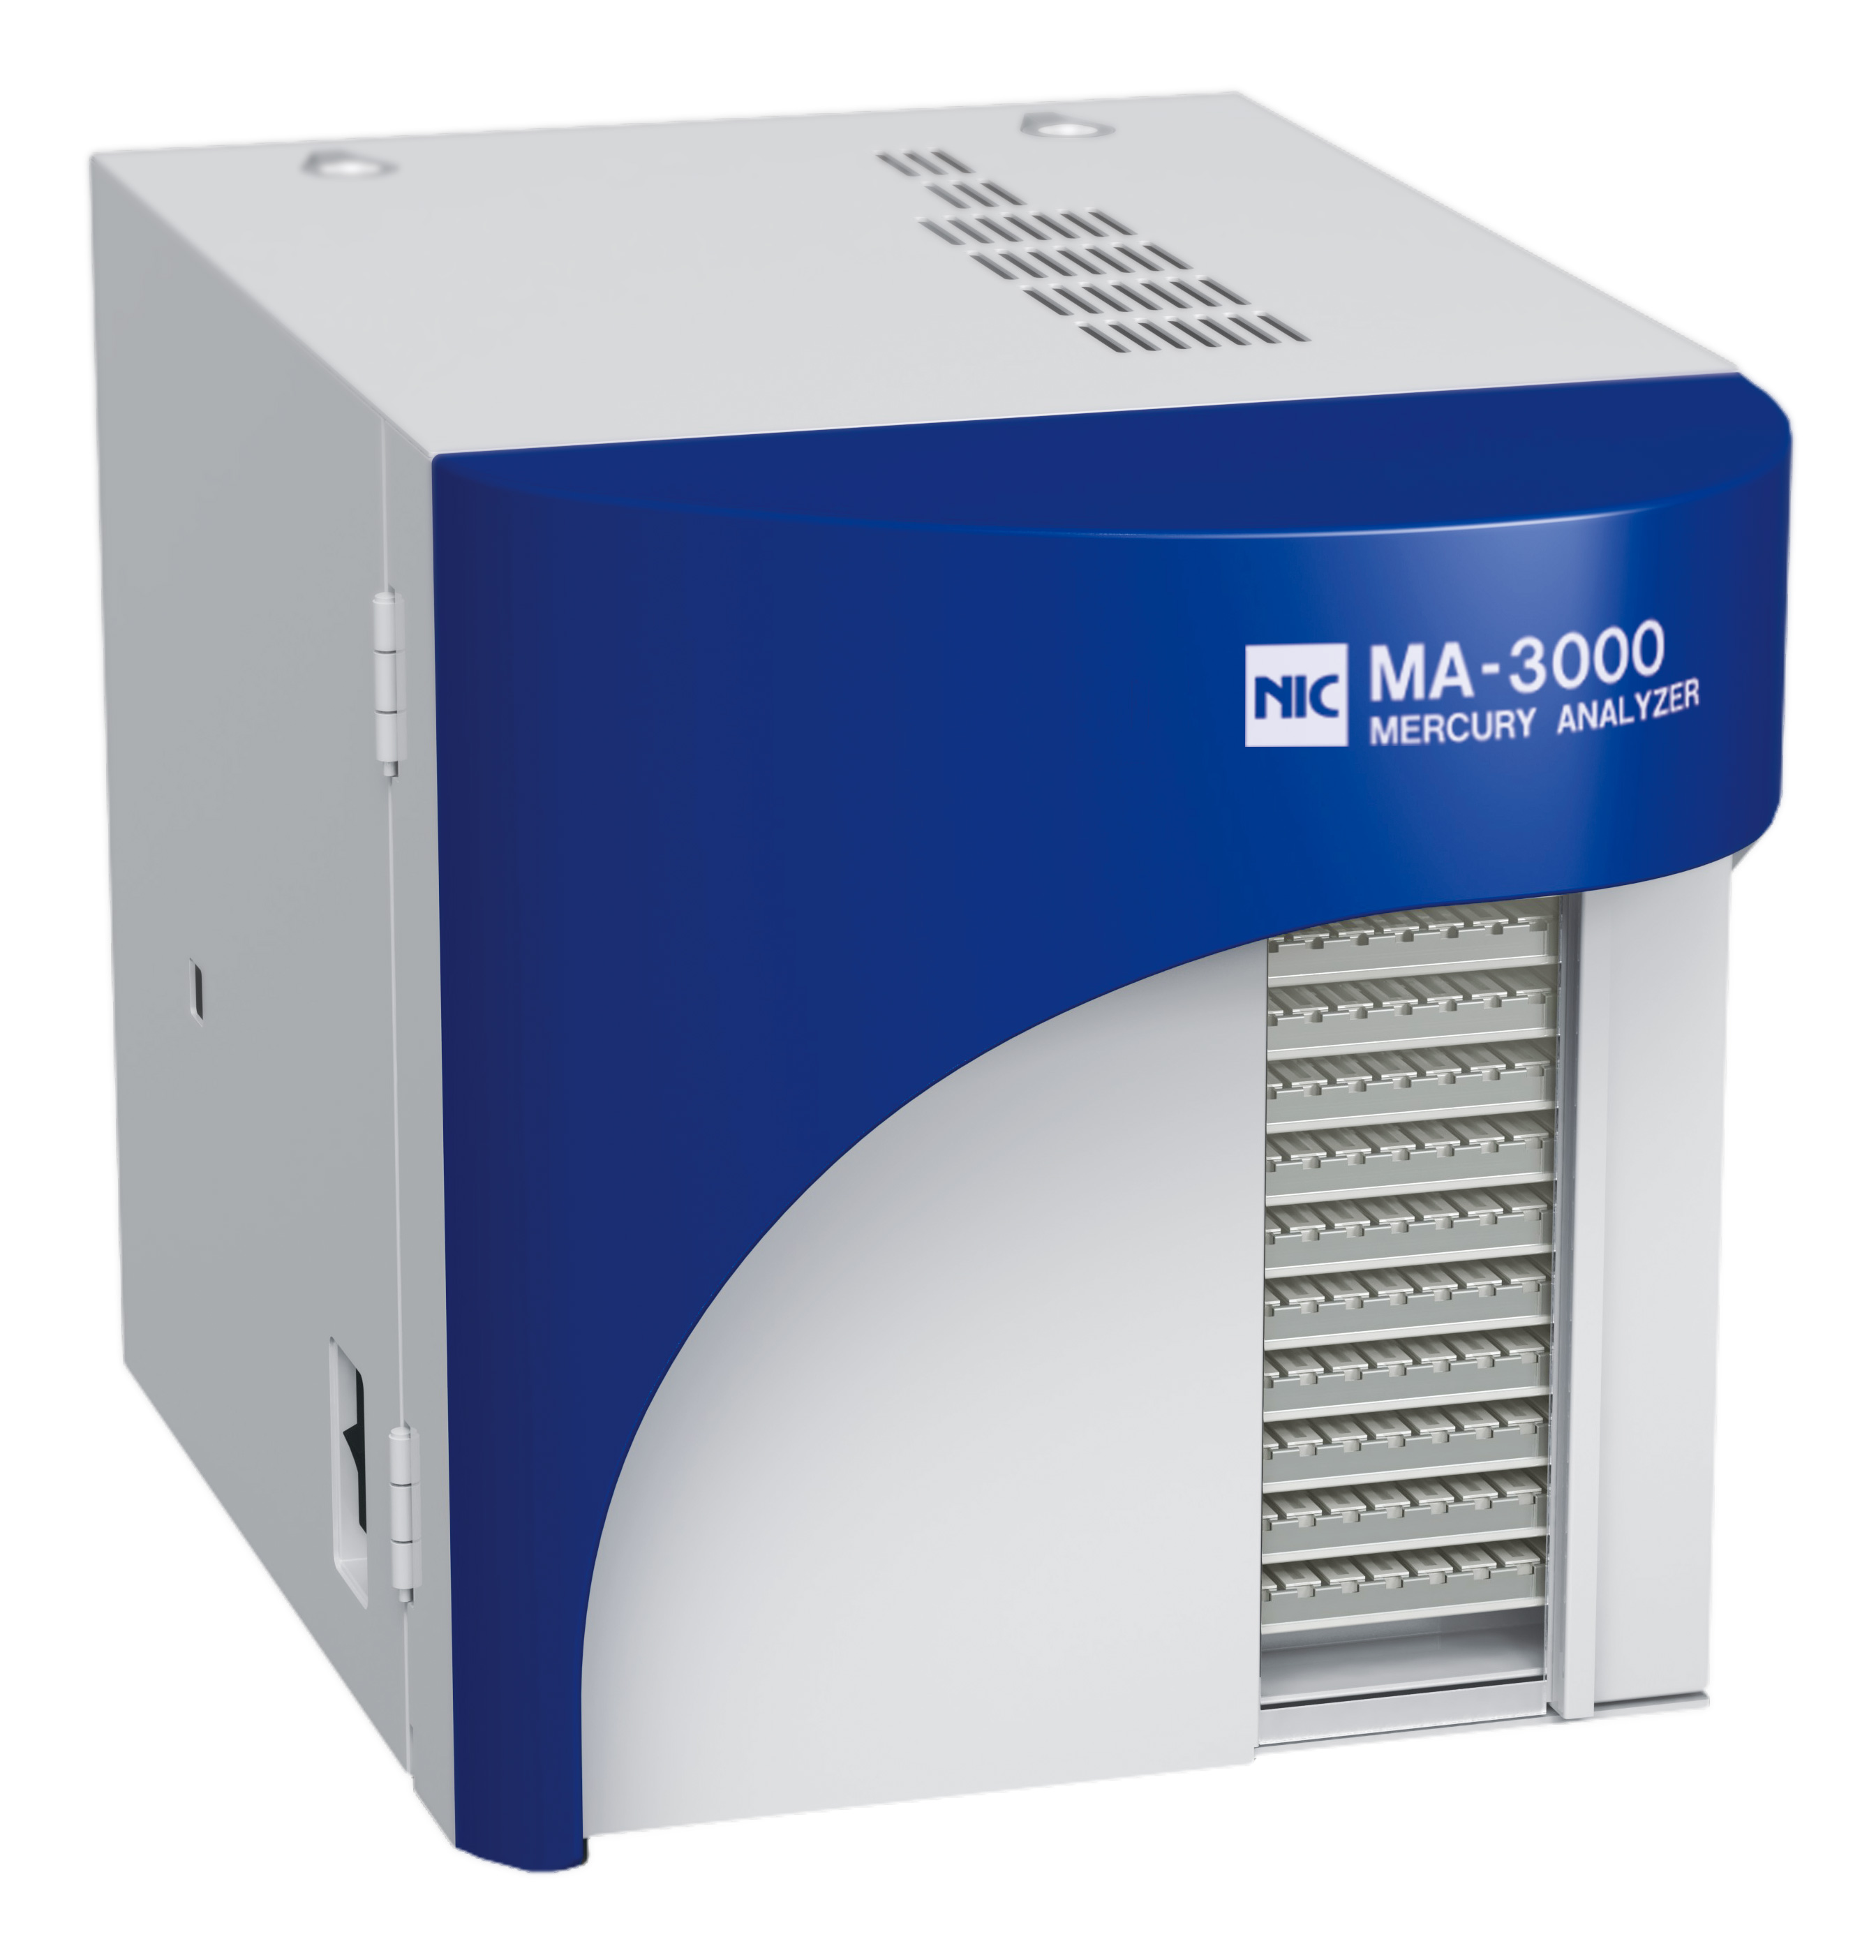 MA-3000 Direct thermal decomposition mercury analyzer